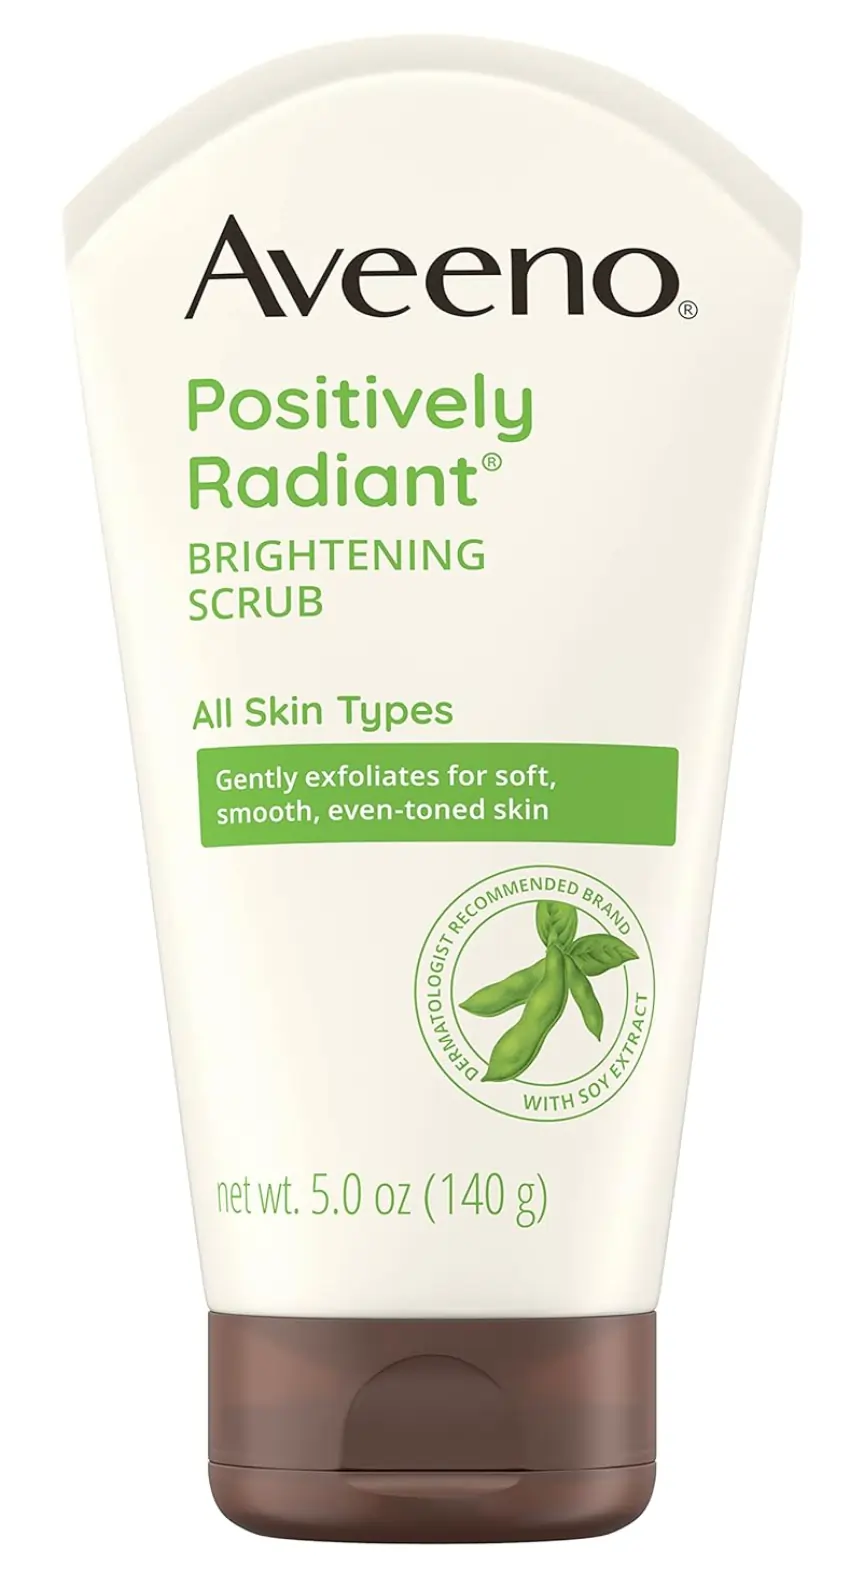 FEMMENORDIC's choice in the Aveeno vs St Ives scrub comparison, the Aveeno Positively Radiant Skin Brightening Daily Scrub